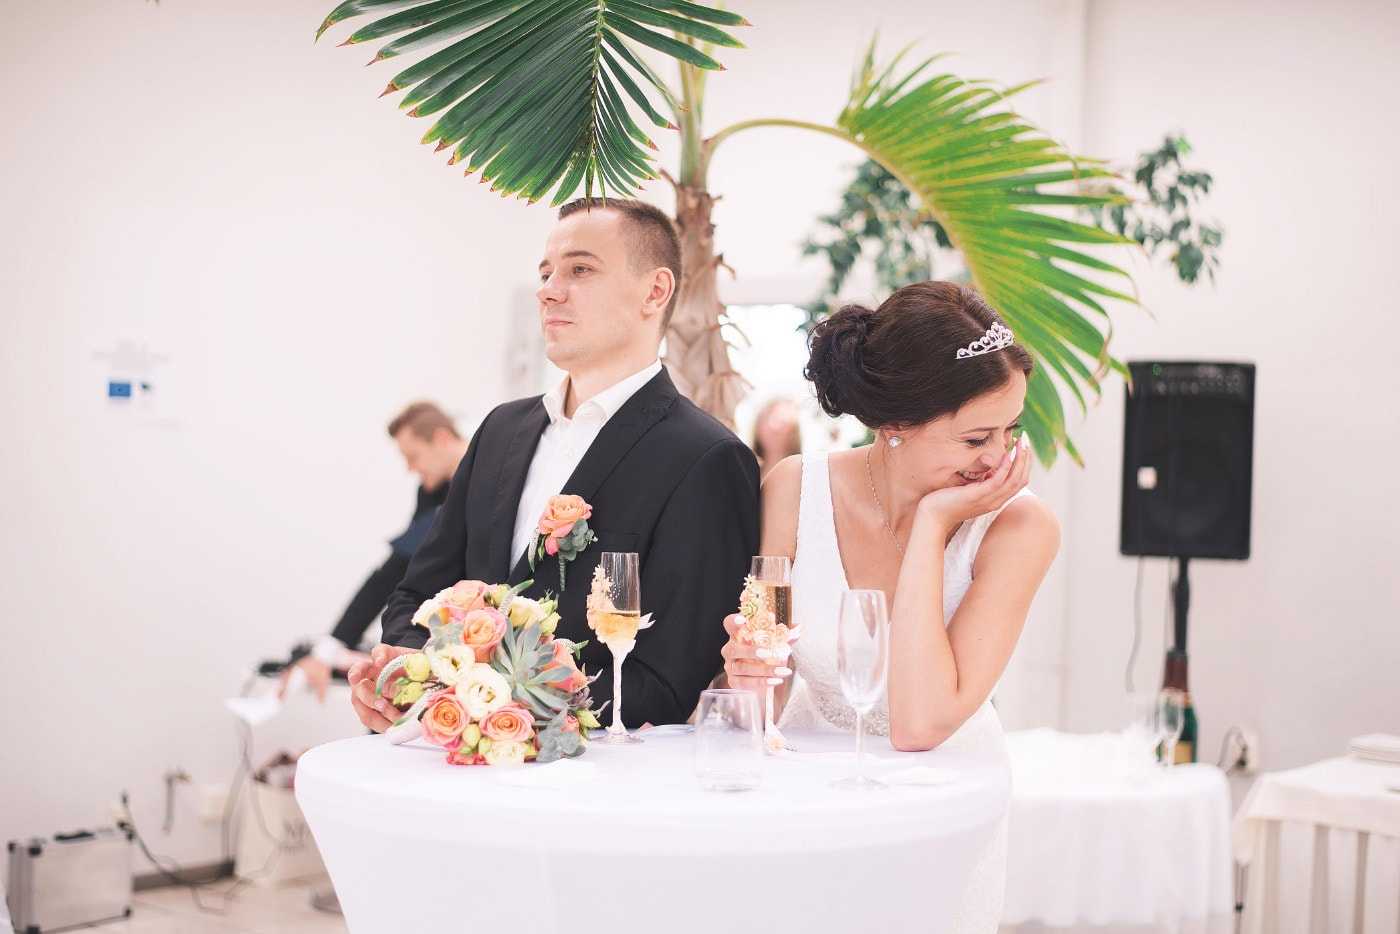 Сценарий свадьбы без тамады - эконом вариант